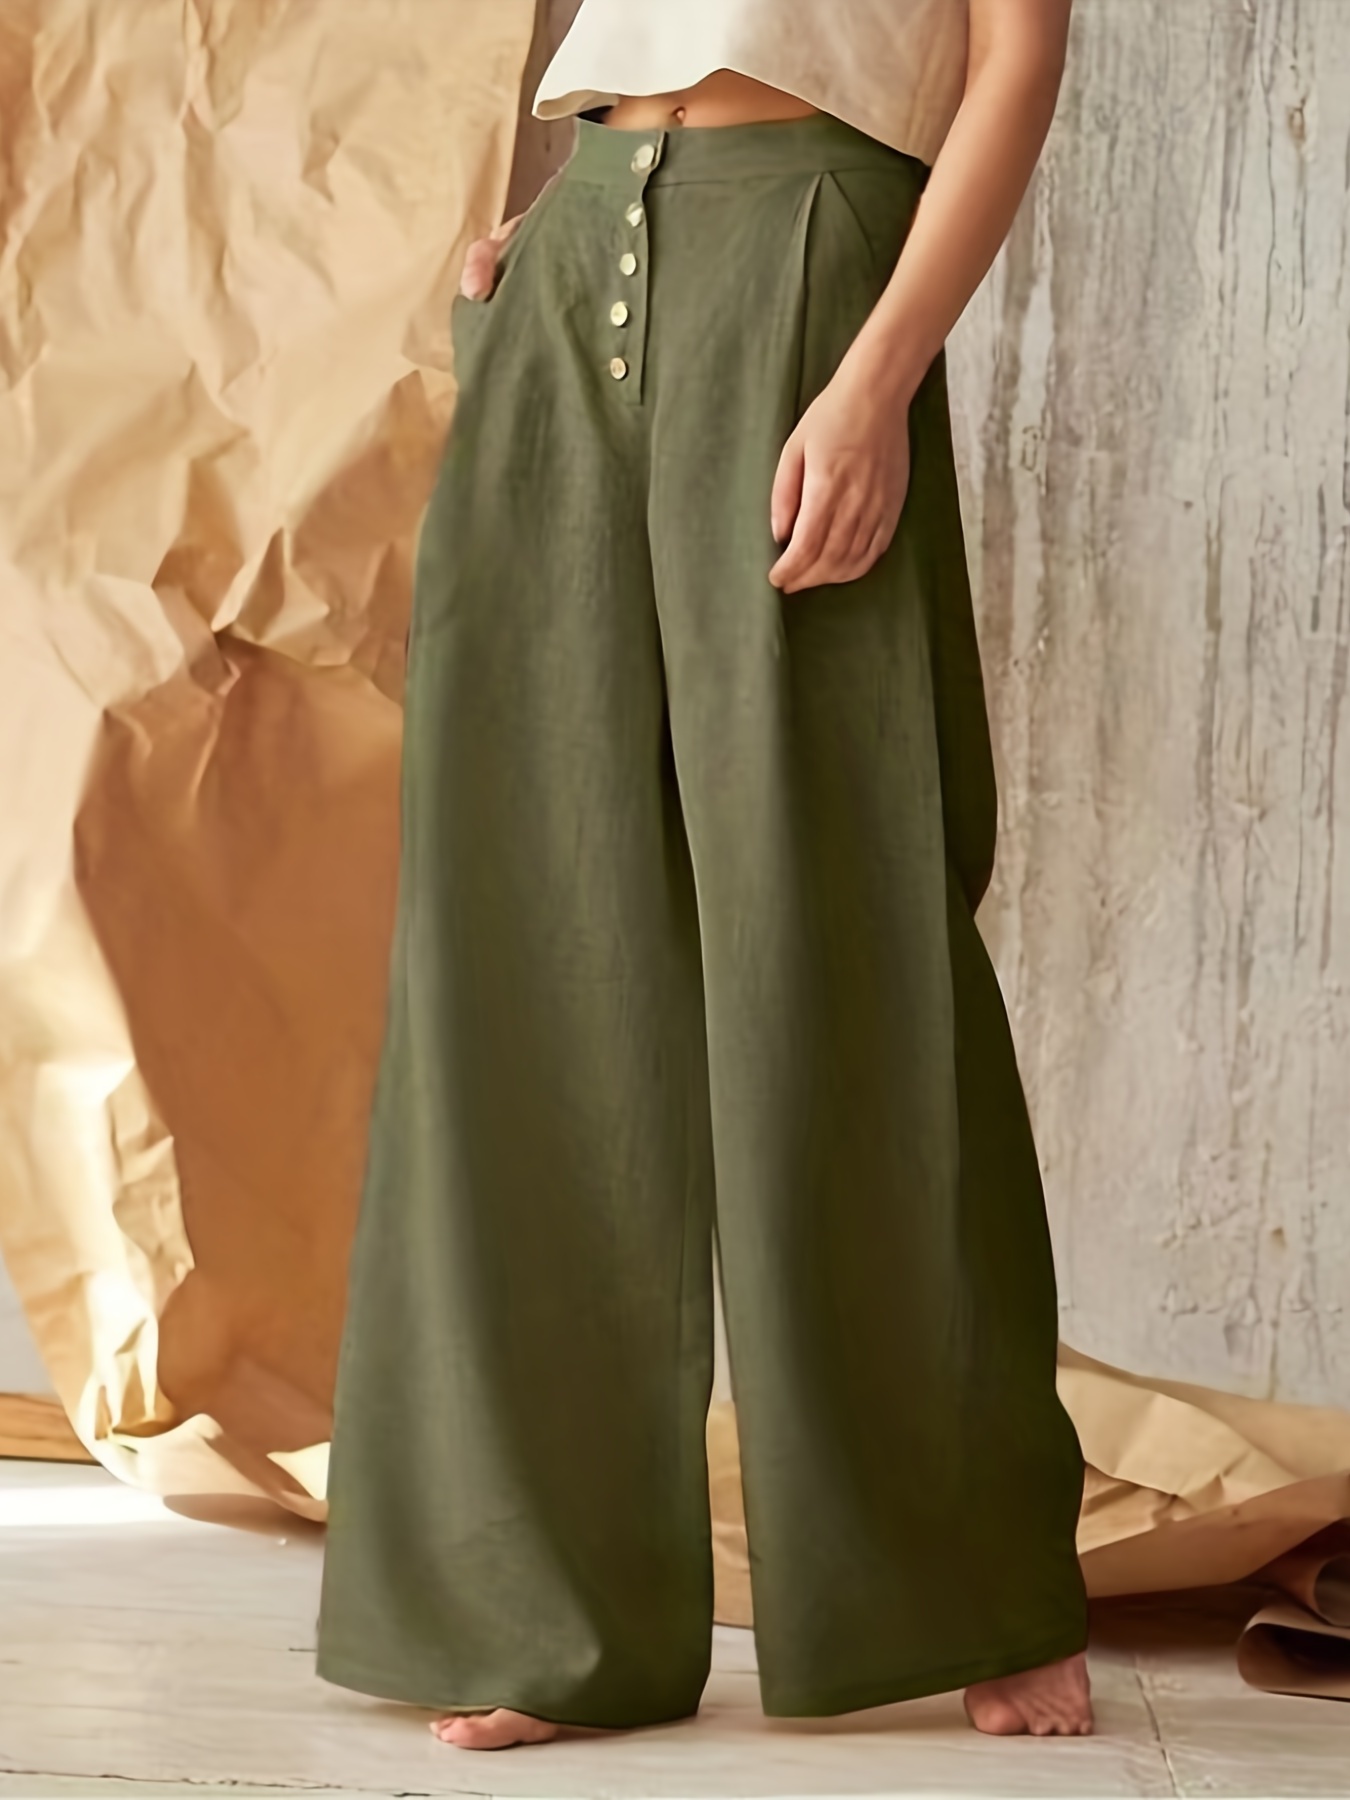 Olive Green Corduroy Pants - Flare Leg Pants - High Rise Pants - Lulus